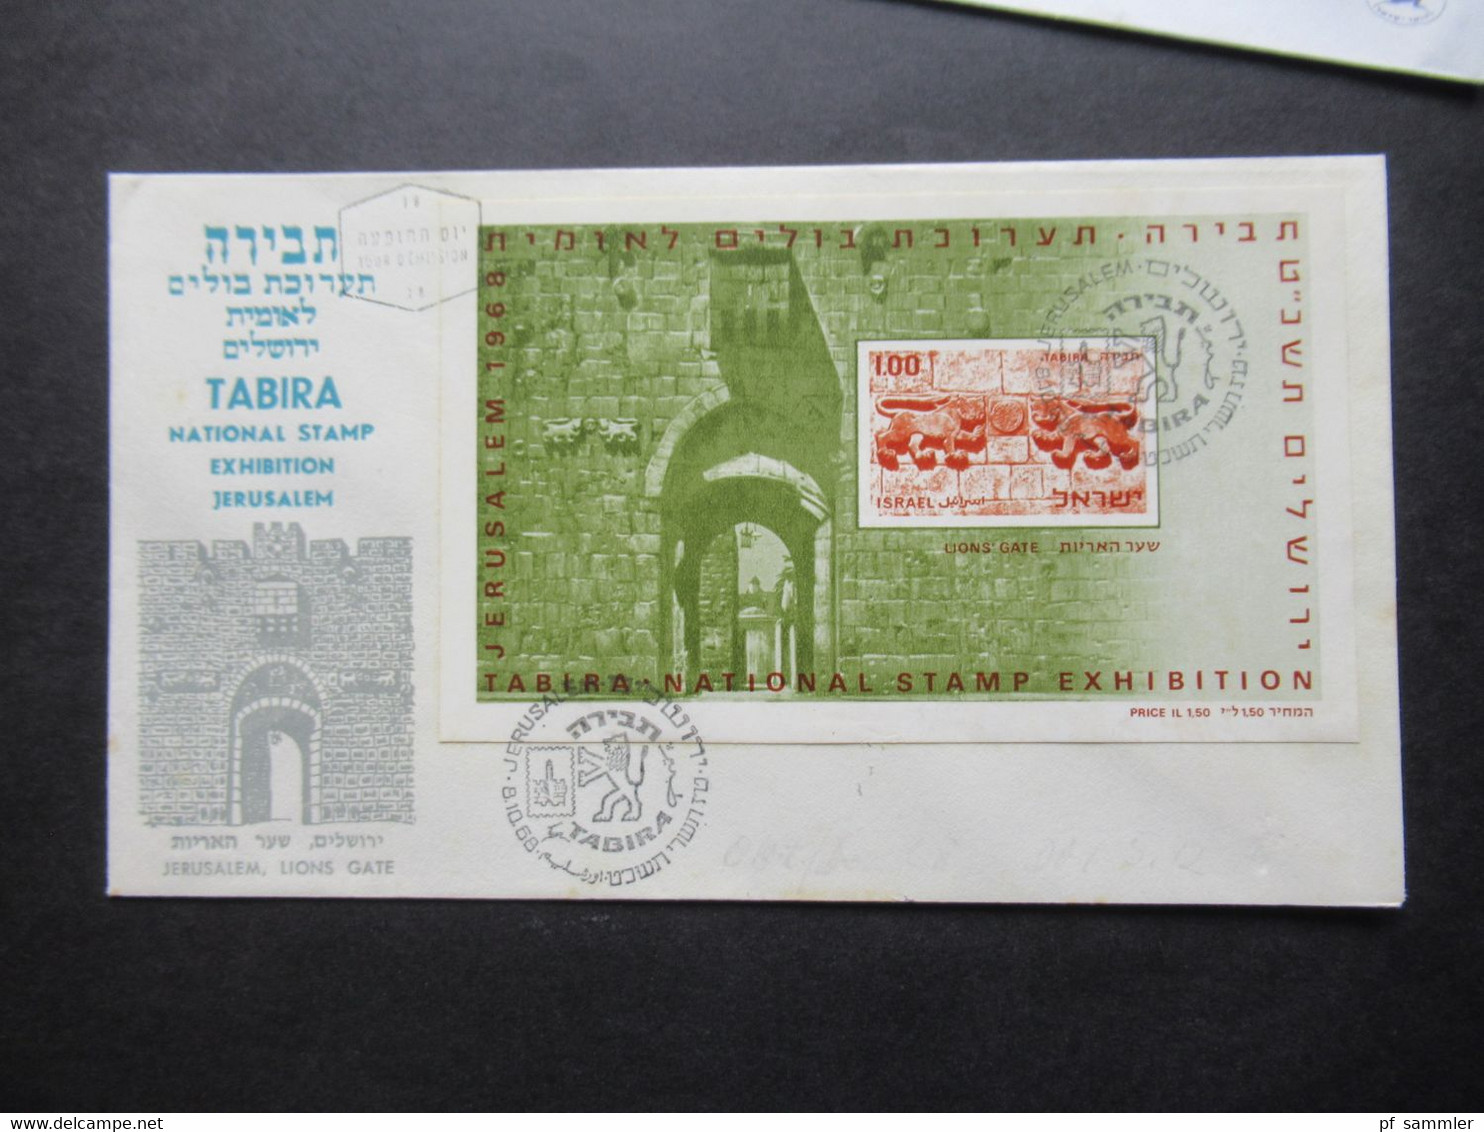 Israel 1970 Motivmarken 2x Block 2 Sonderbelege National Stamp Exhibition Tabit / Tabira / FDC ?? Jerusalem - Covers & Documents